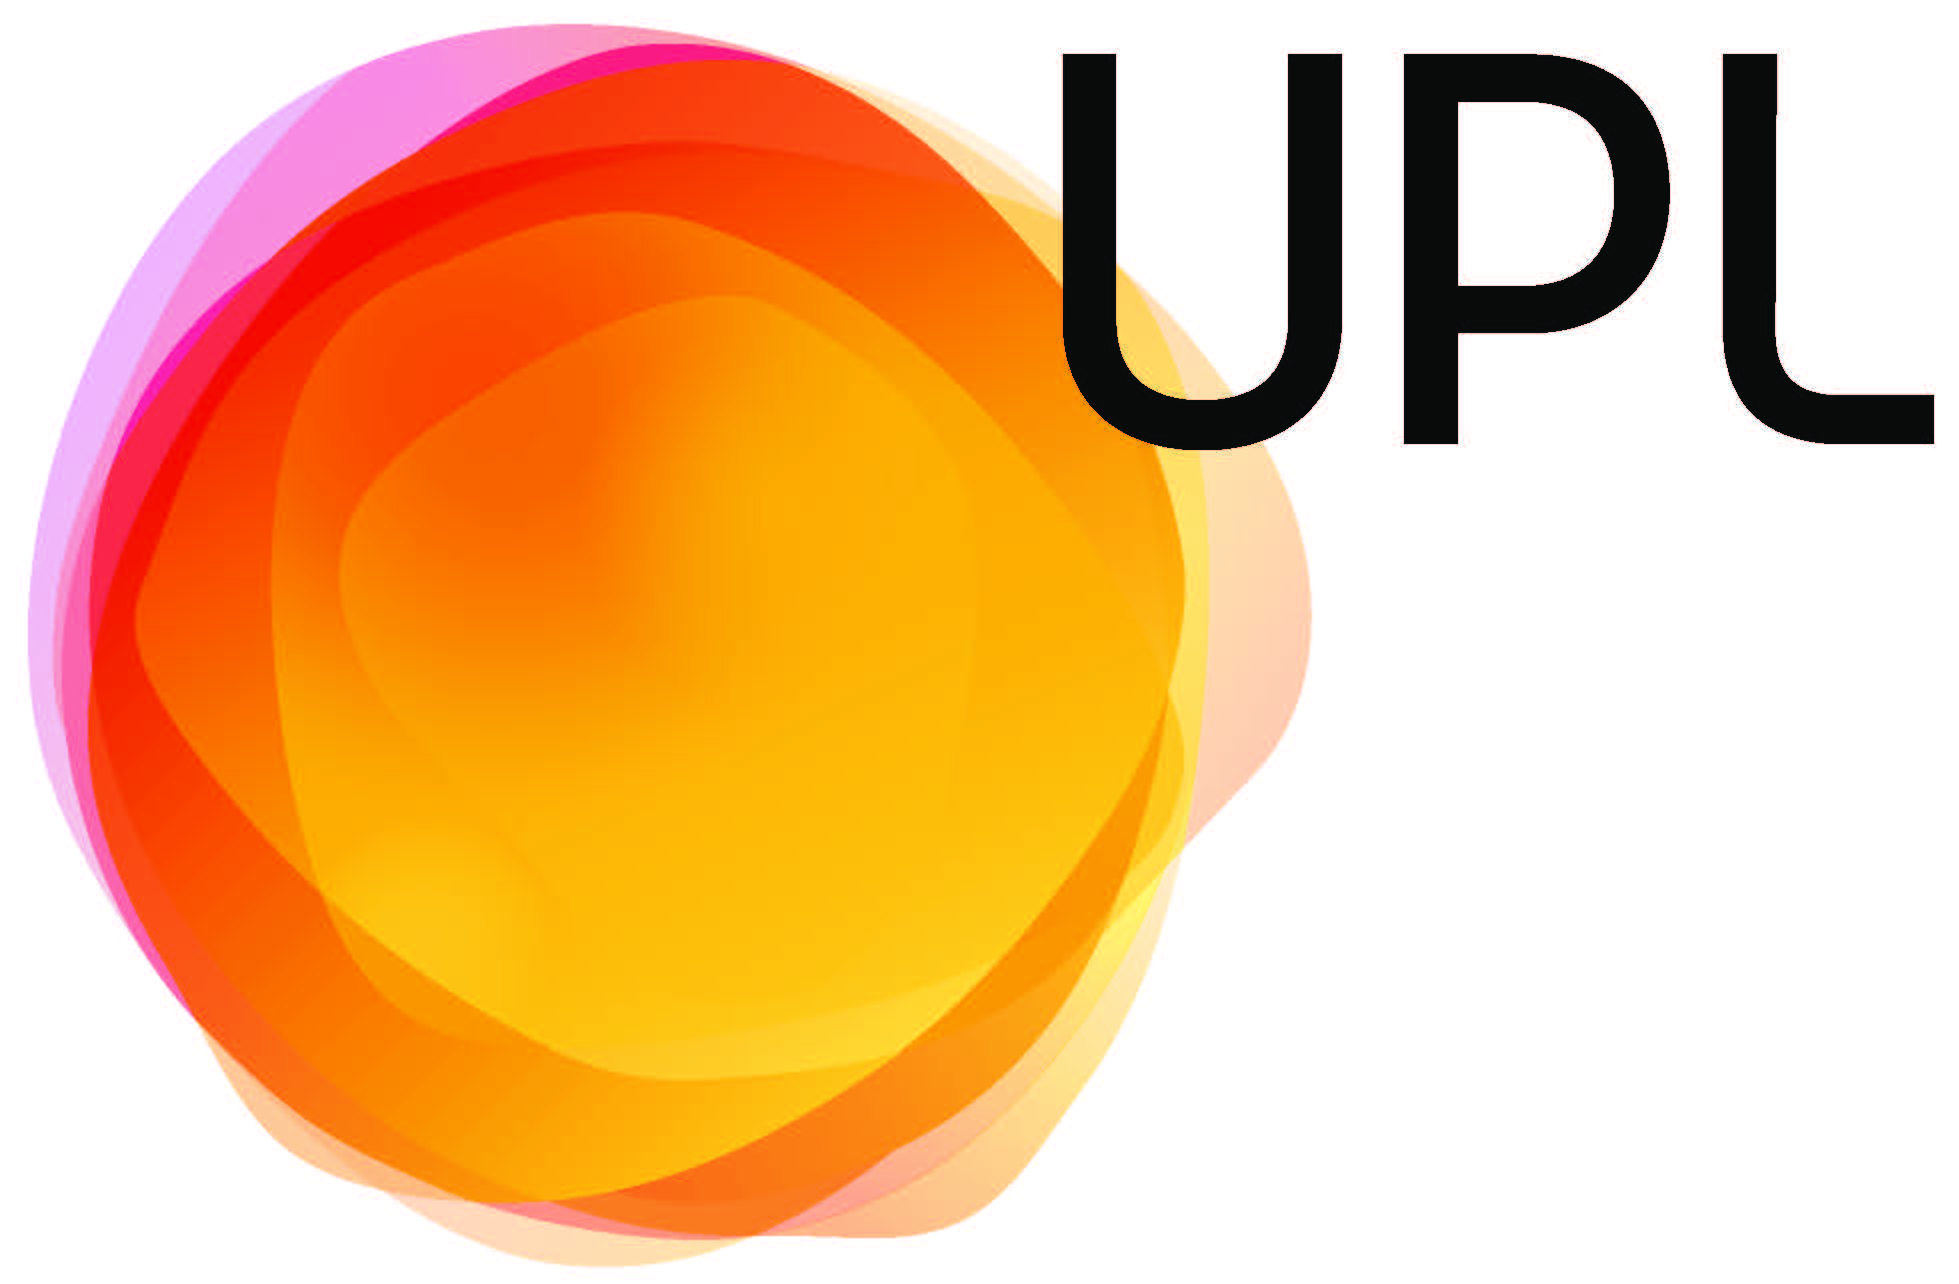 UPL Limited